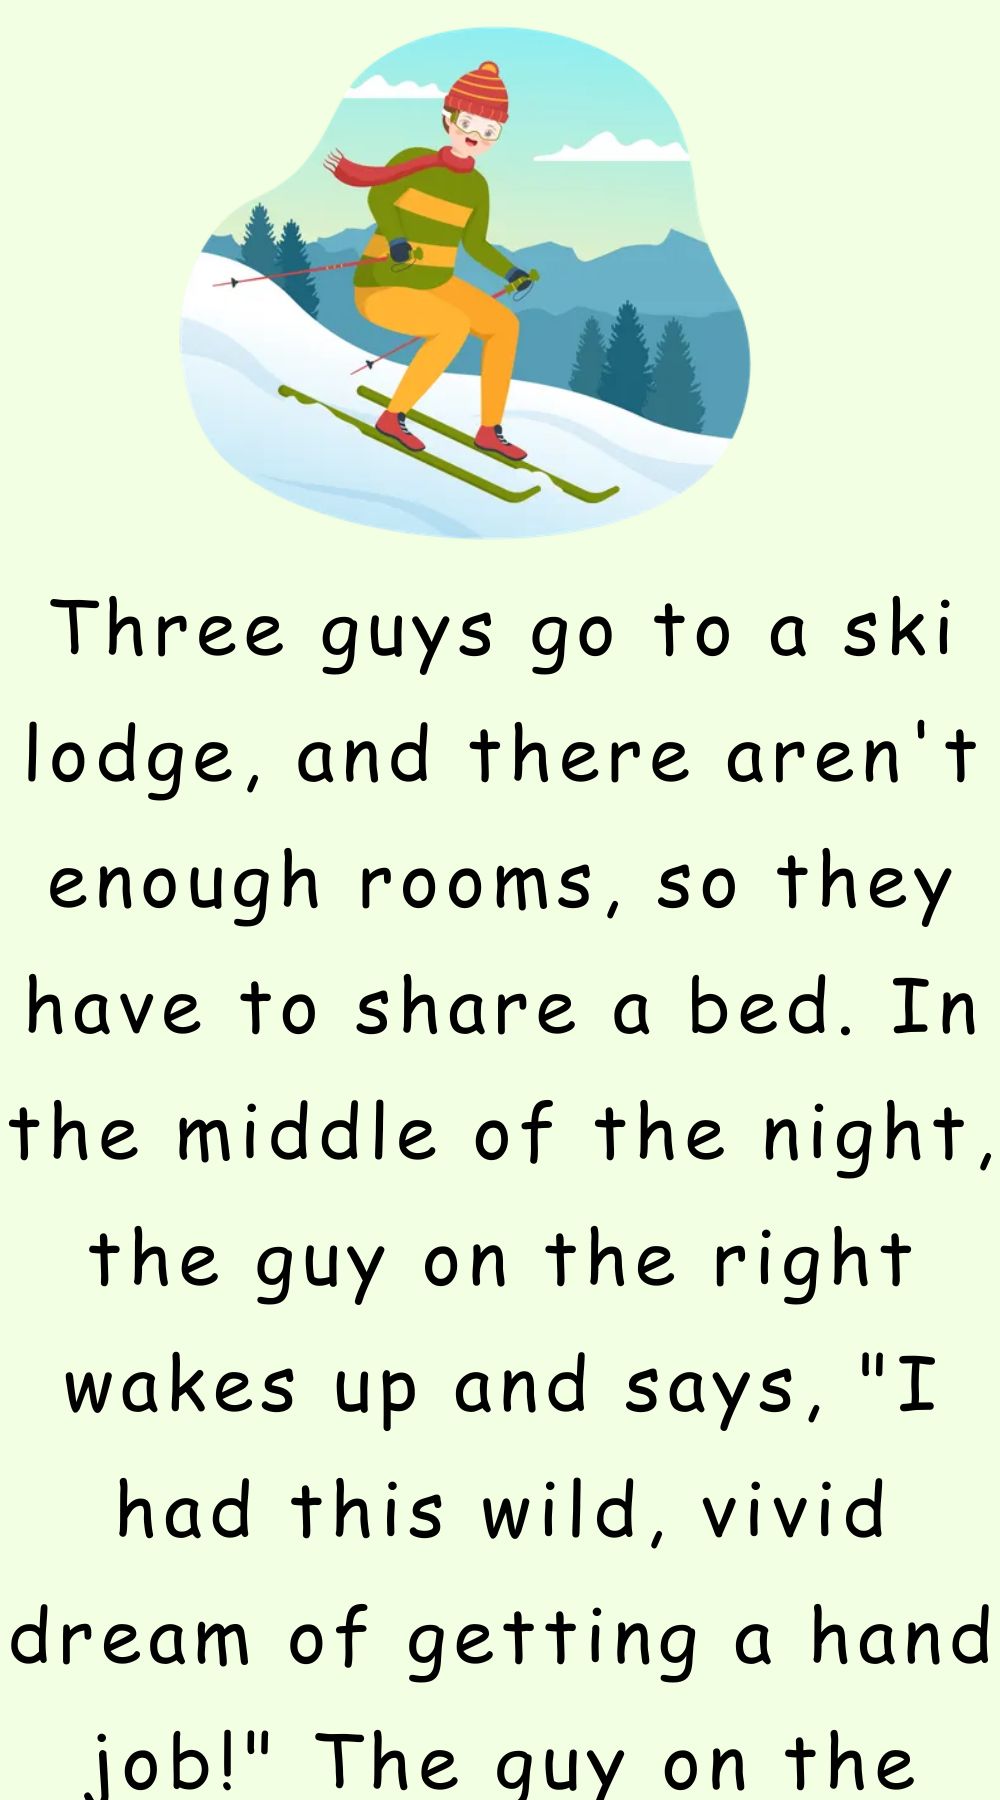 Three guys go to a ski lodge